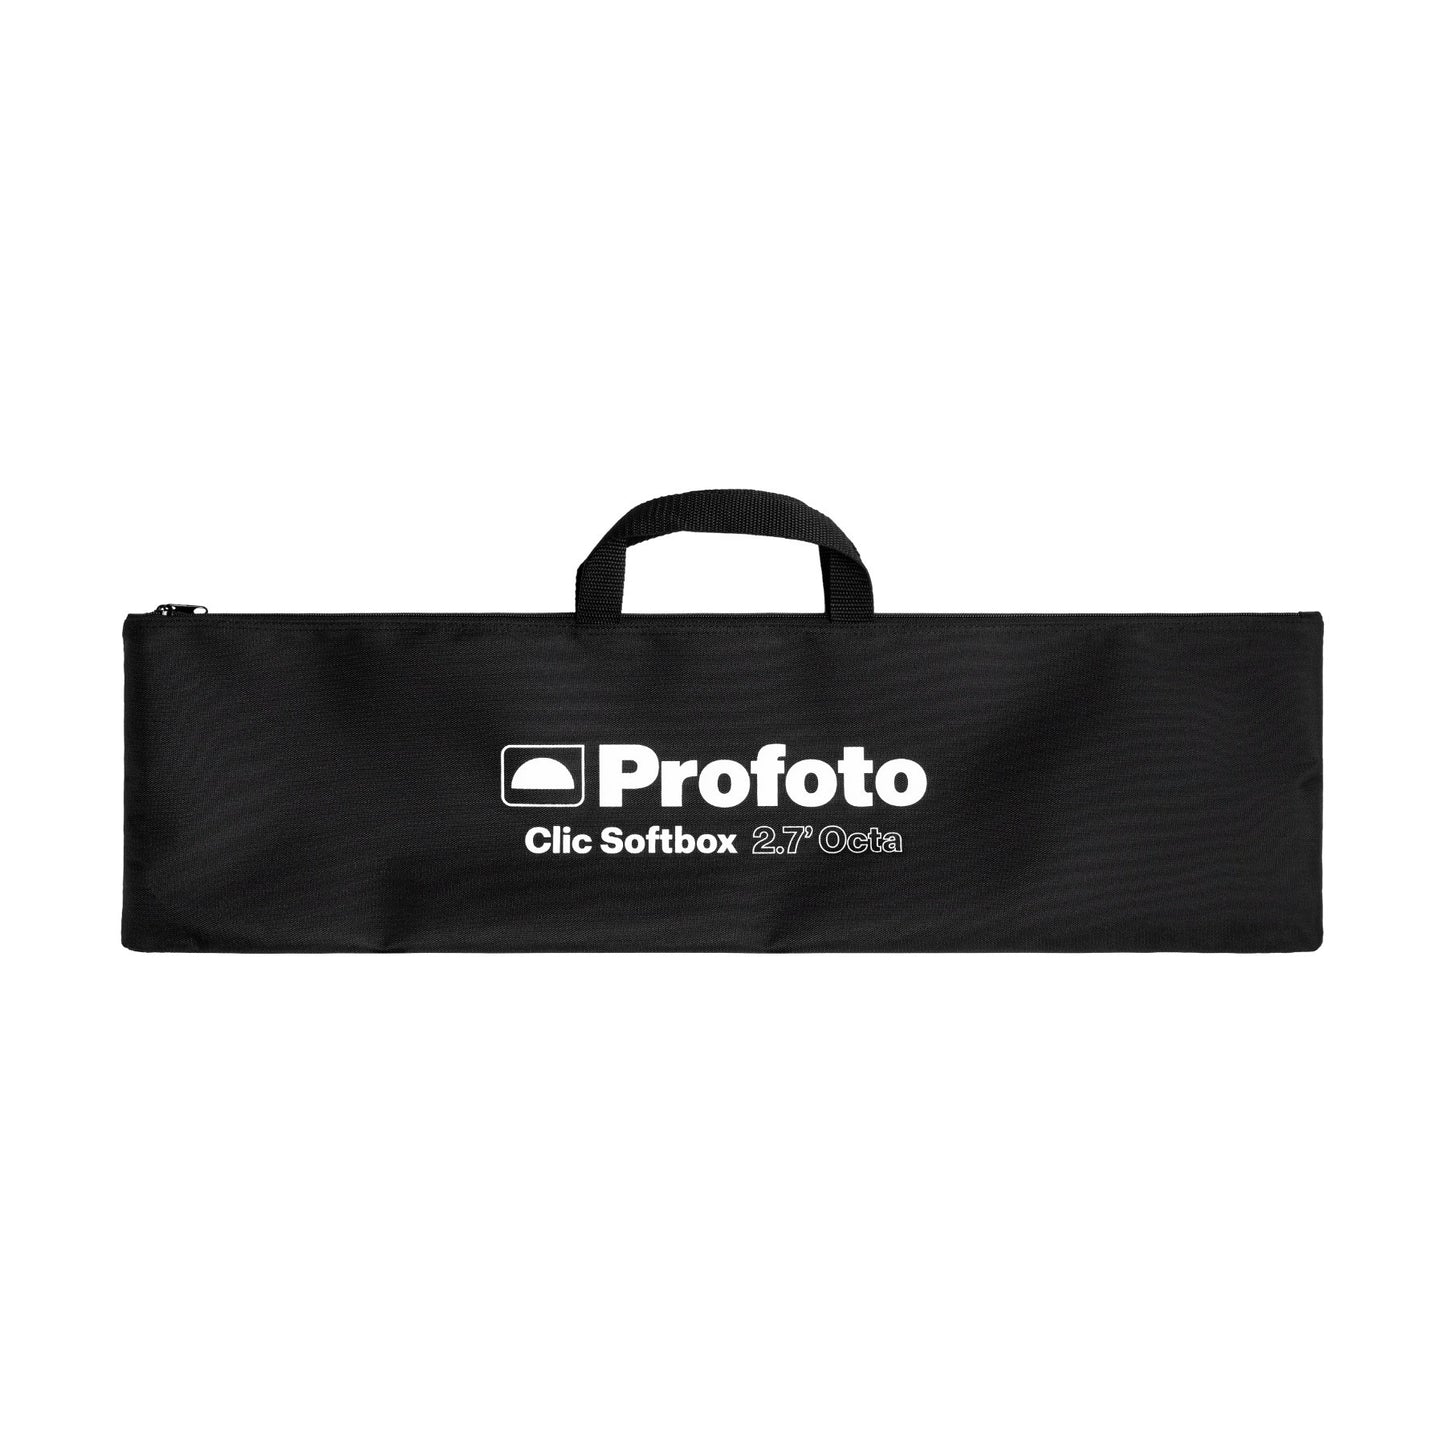 Buy Profoto Clic Softbox 2.7’ (80cm) Octa at Topic Store